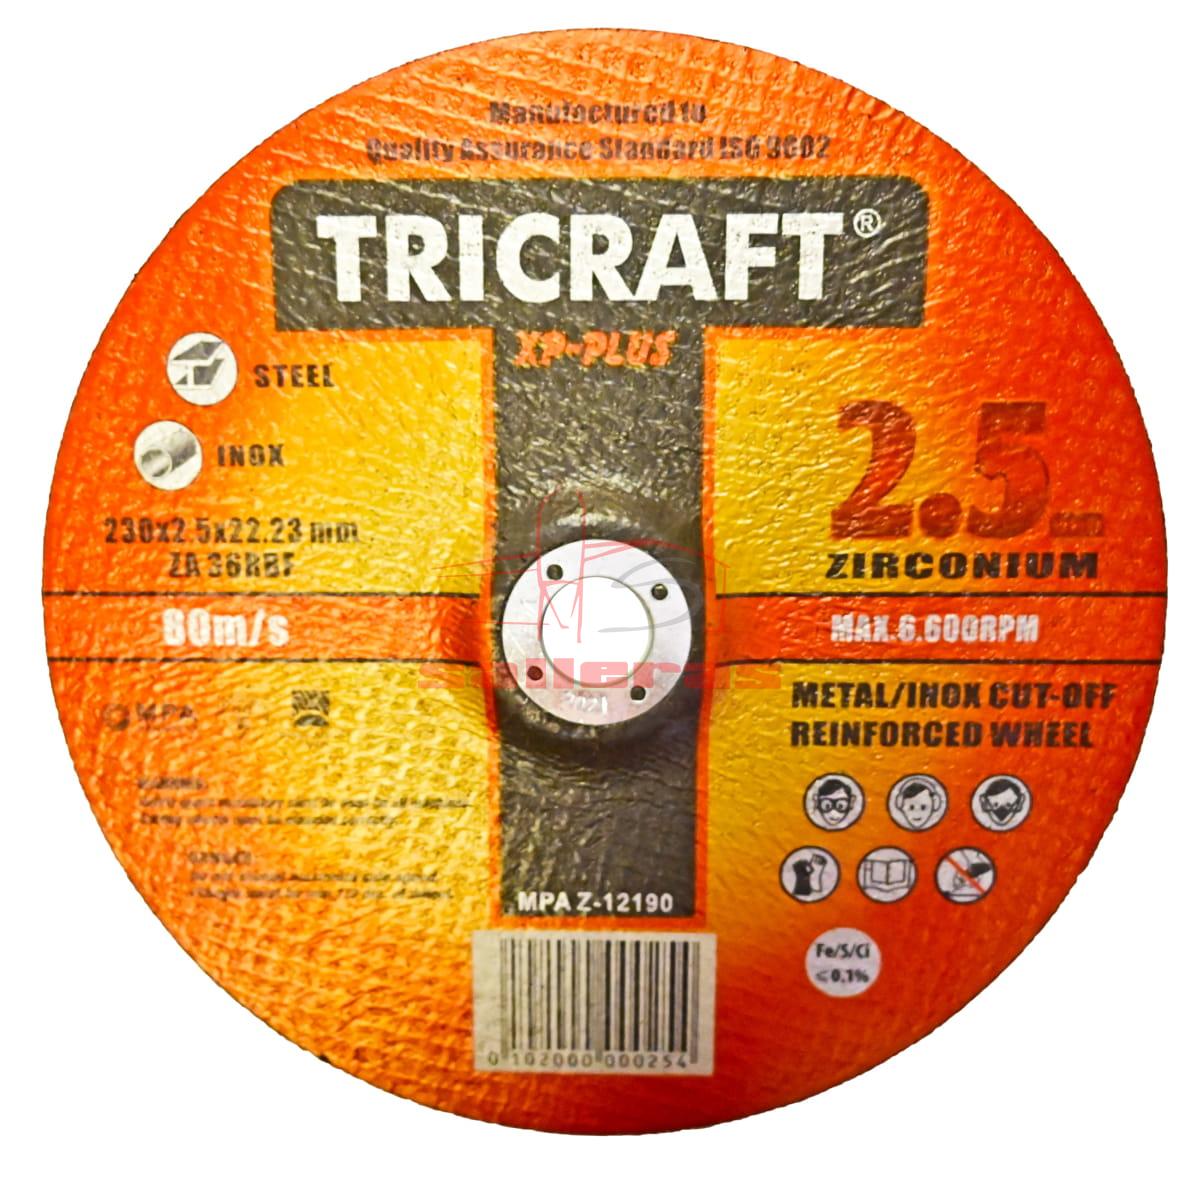 Disco cortar 230 tricraft